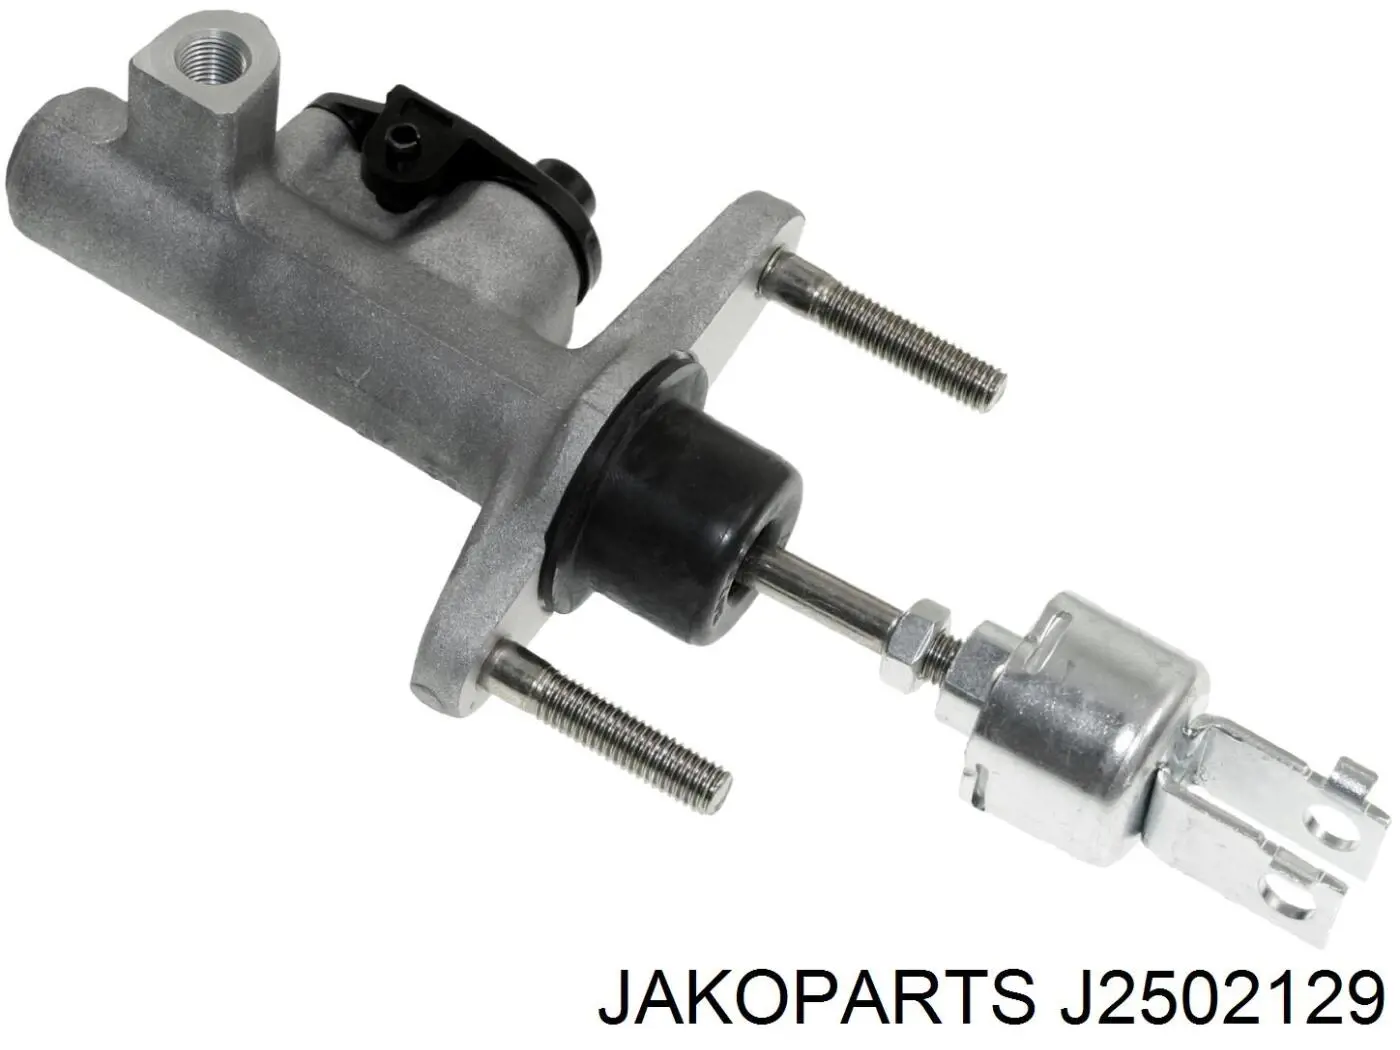 J2502129 Jakoparts cilindro maestro de embrague